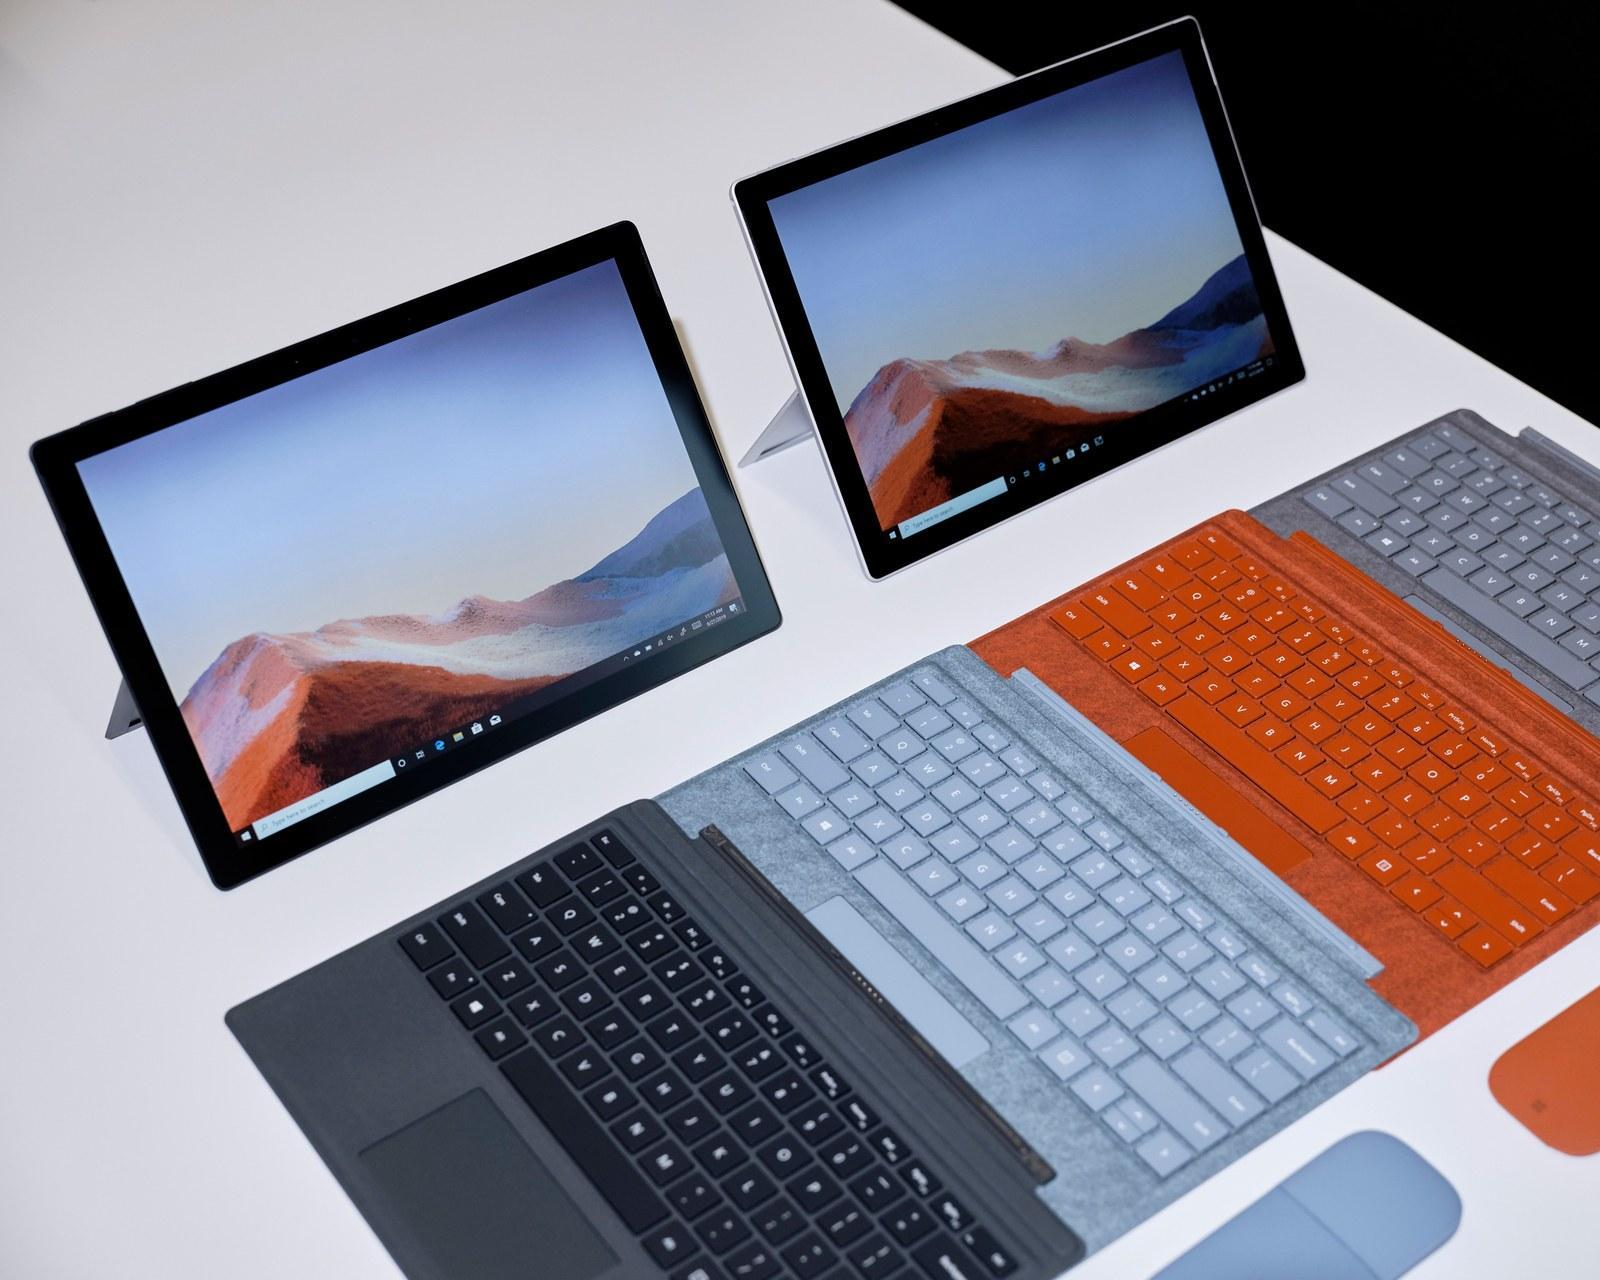 Microsoft ने लॉन्च किये सरफेस प्रो 7, 3 सीरीज़ लैपटॉप